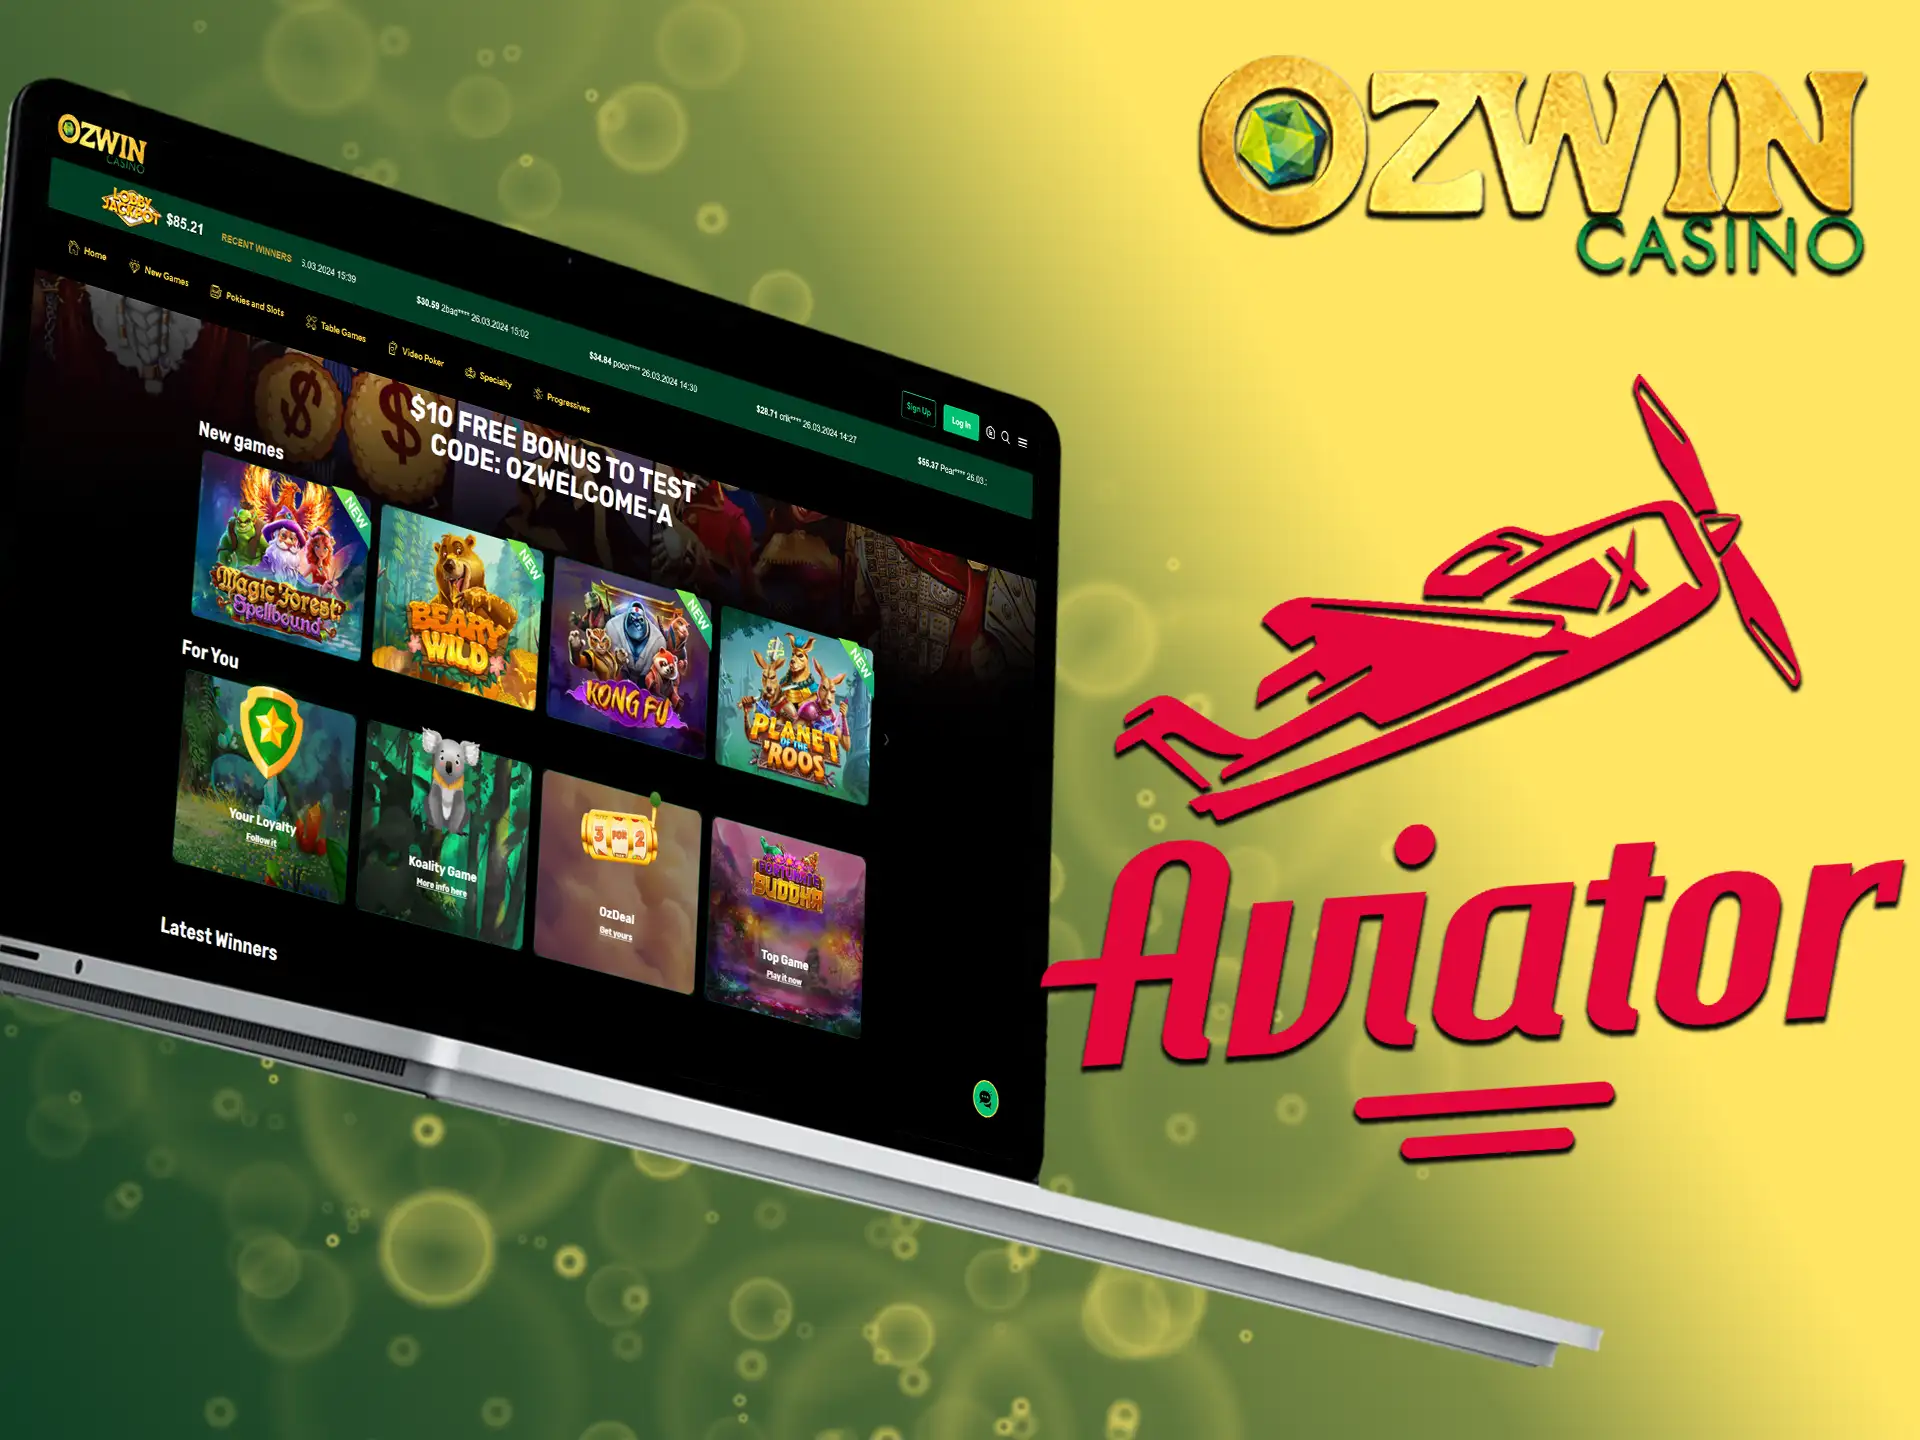 Ozwin Casino has Aviator, the popular crash game!